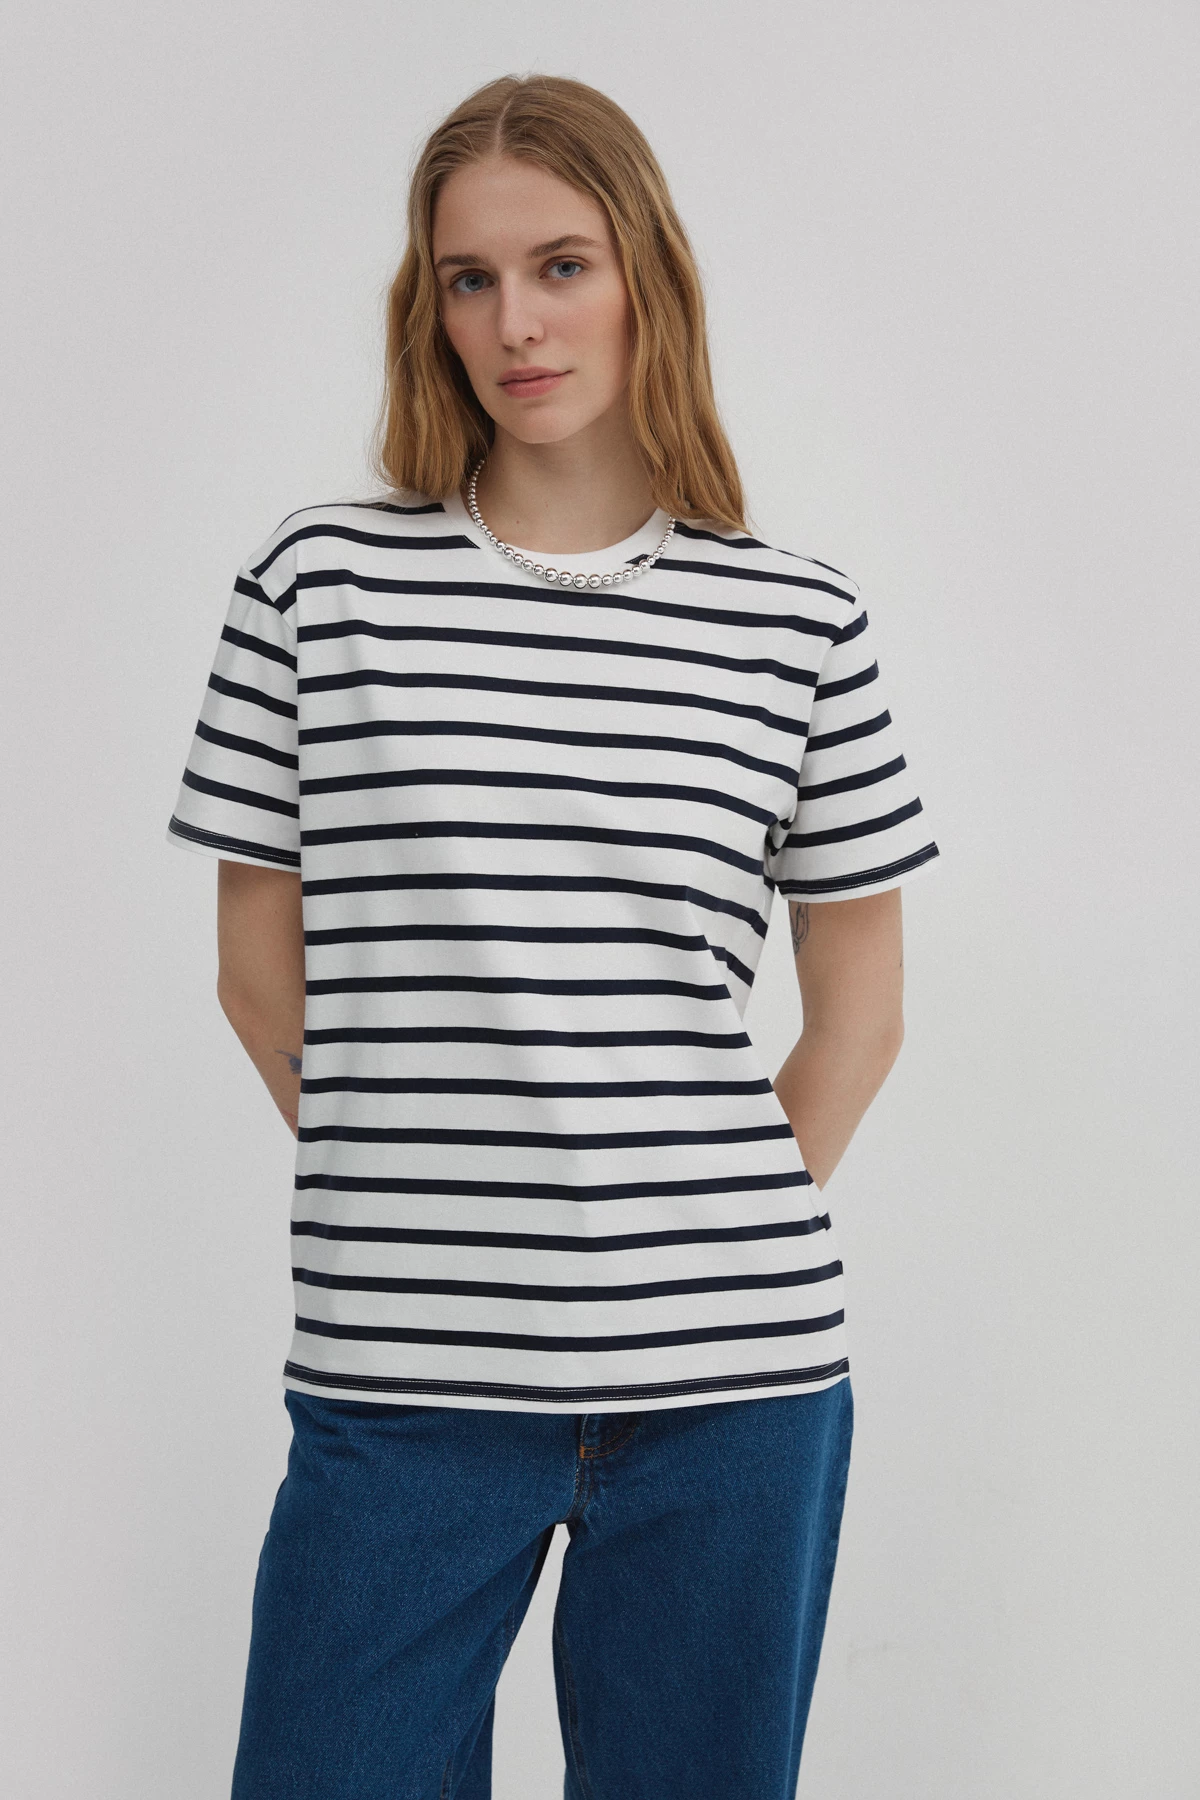 Milky T-shirt in a dark blue stripe with cotton, photo 3